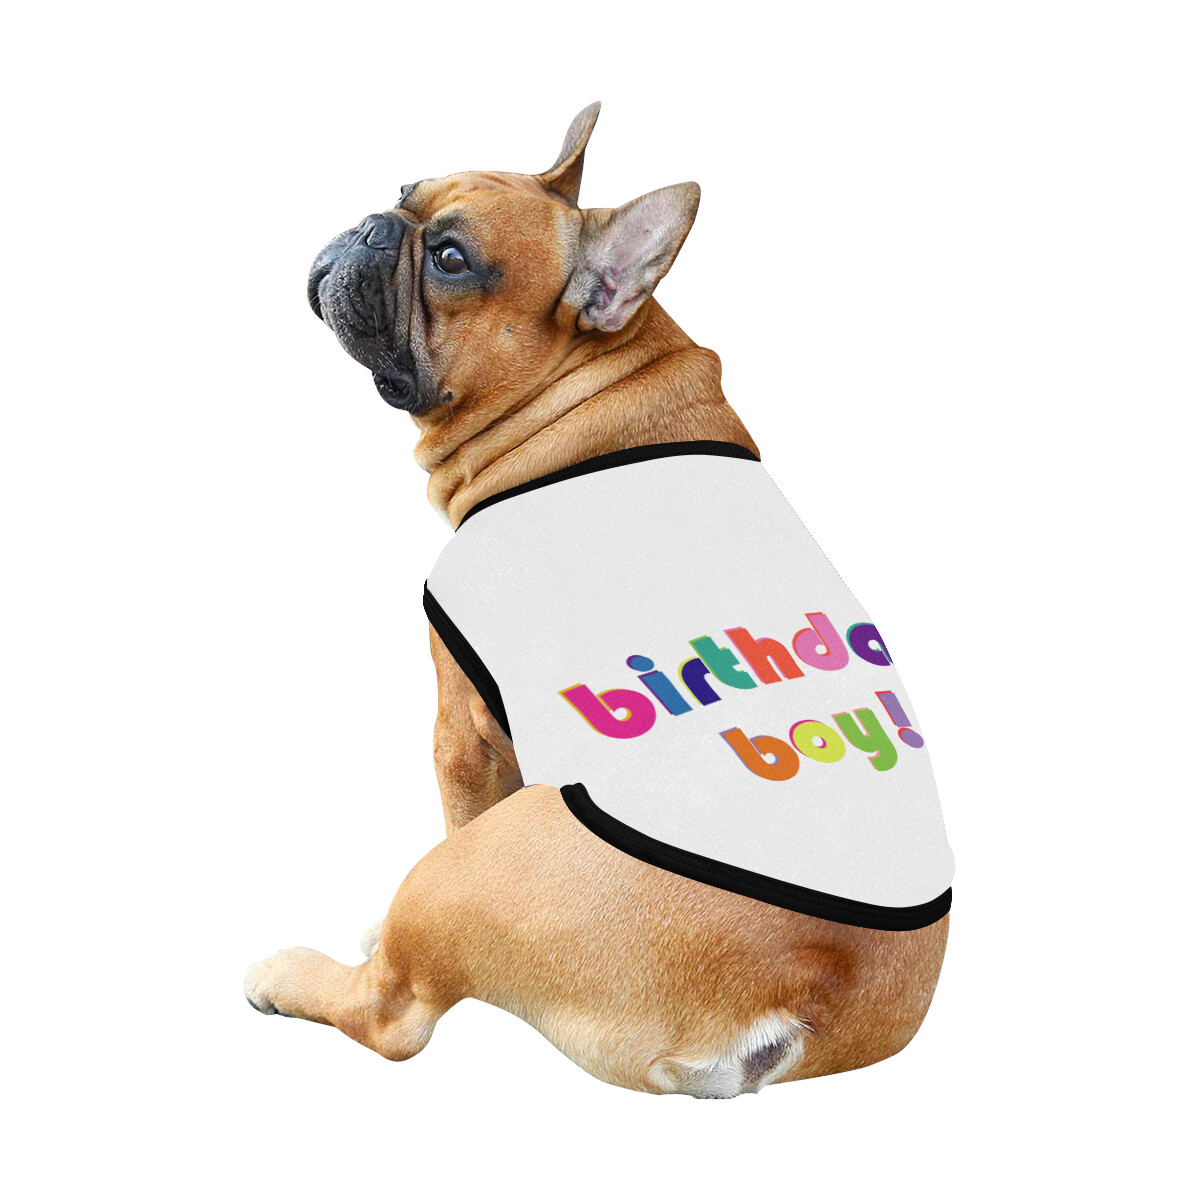 🐕 Birthday Boy Dog shirt, Dog Tank Top, Dog t-shirt, Dog clothes, Gifts, front back print, 7 sizes XS to 3XL, dog gifts, white